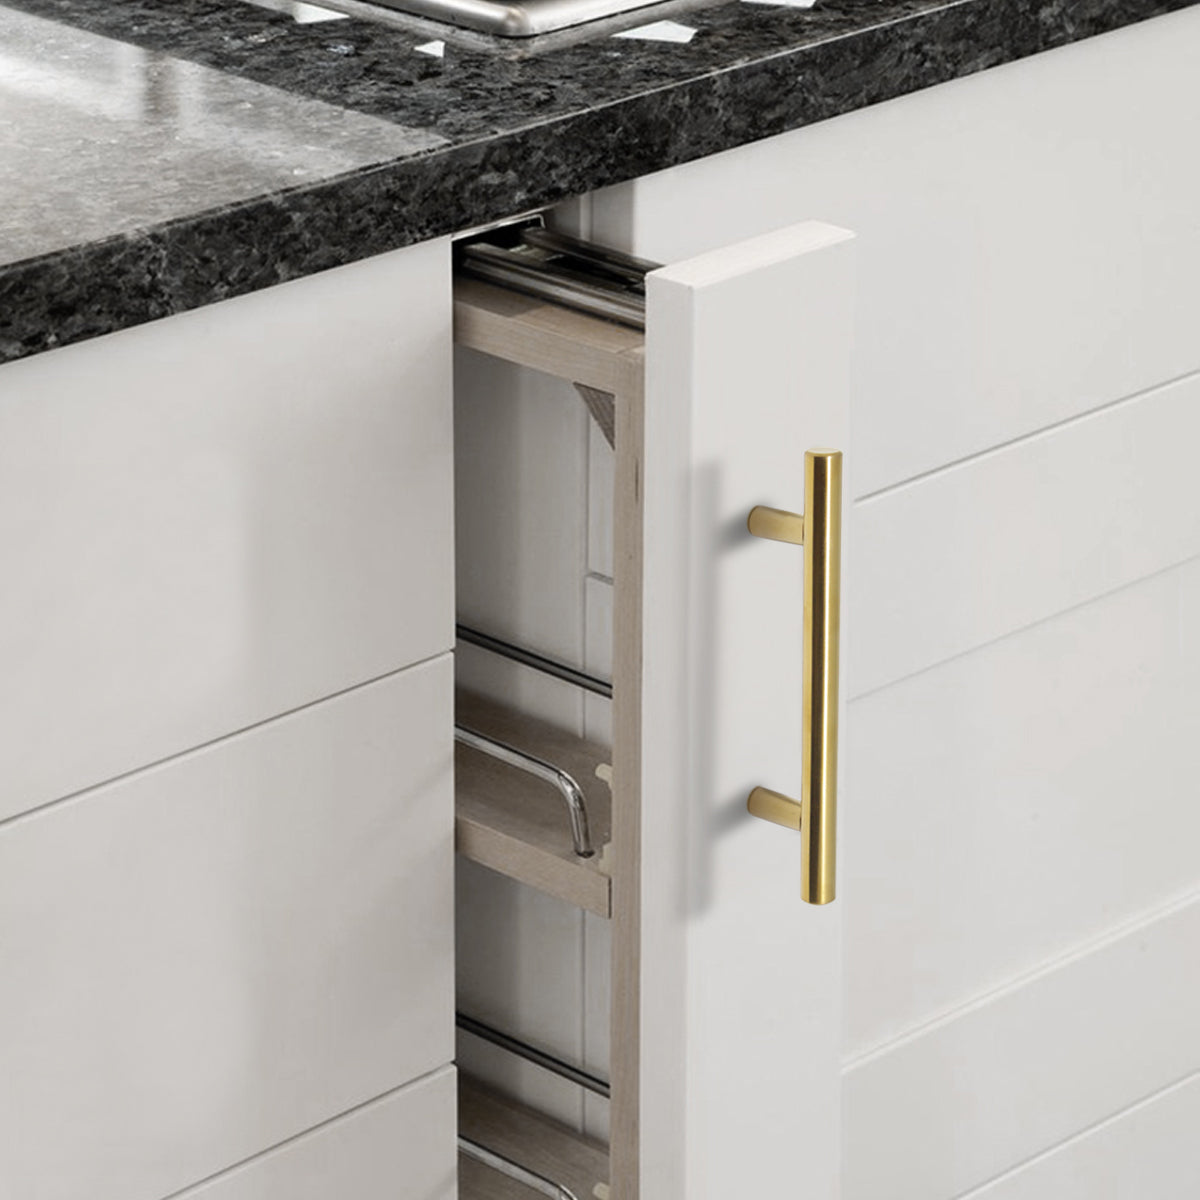 Probrico Euro T Bar Cabinet Handles Brushed Brass Finish Kitchen Hardware Drawer Pulls Knobs PD1123HGD 100packs - Probrico